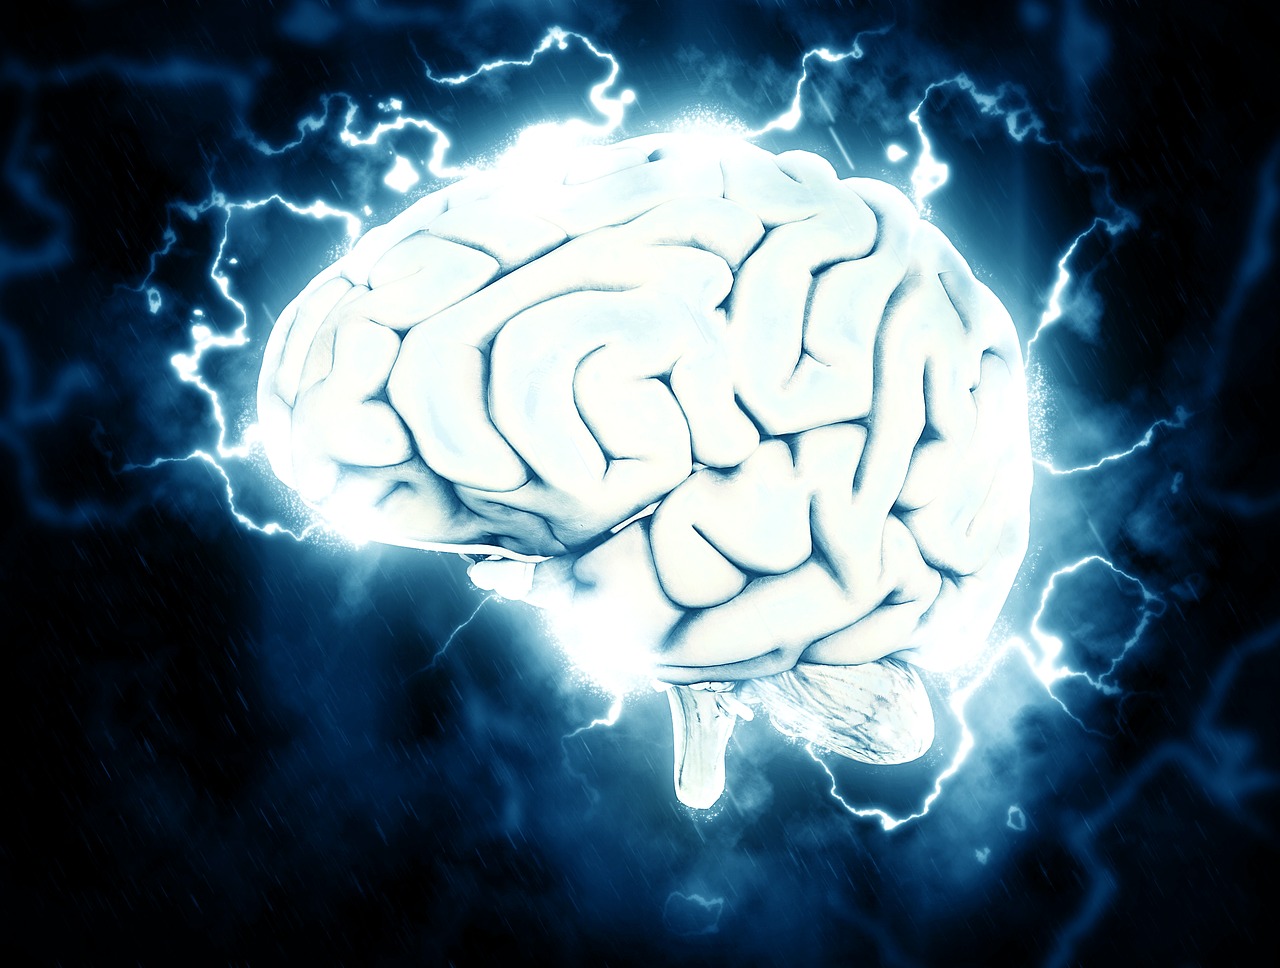 The Neurolasticity of the Brain